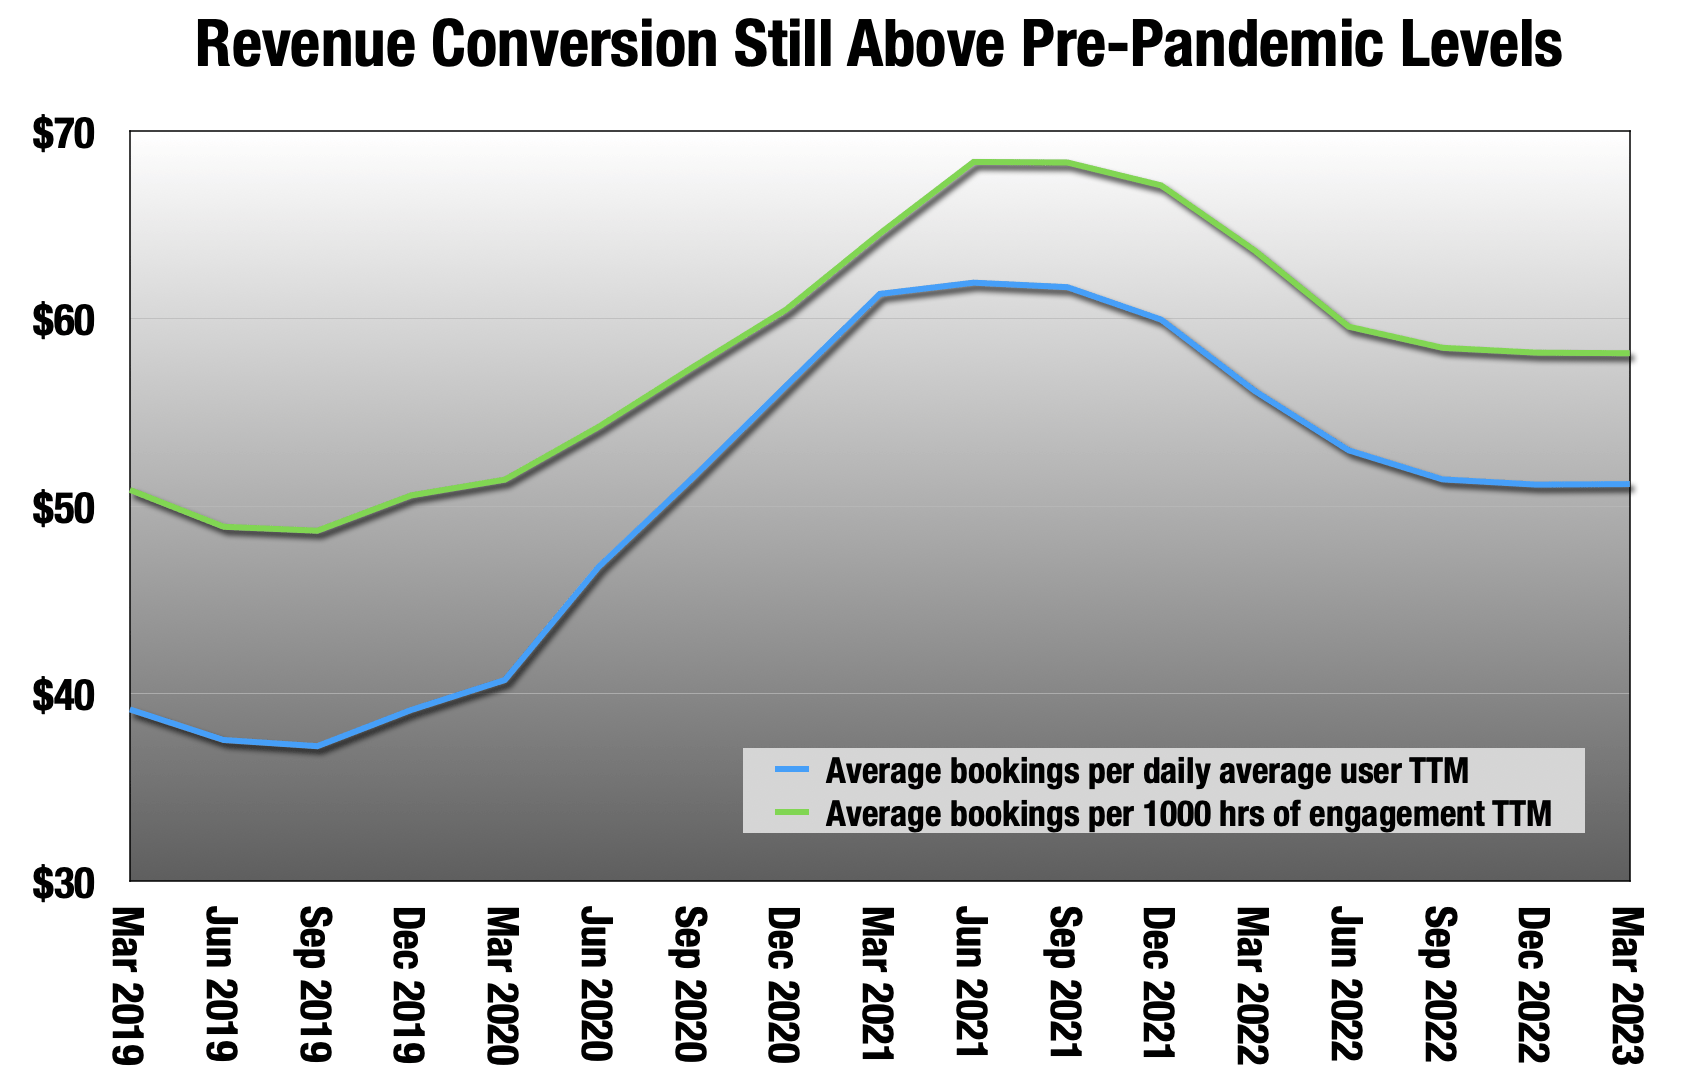 Roblox (RBLX) Misses Revenue Estimates on Slowing Post-Pandemic